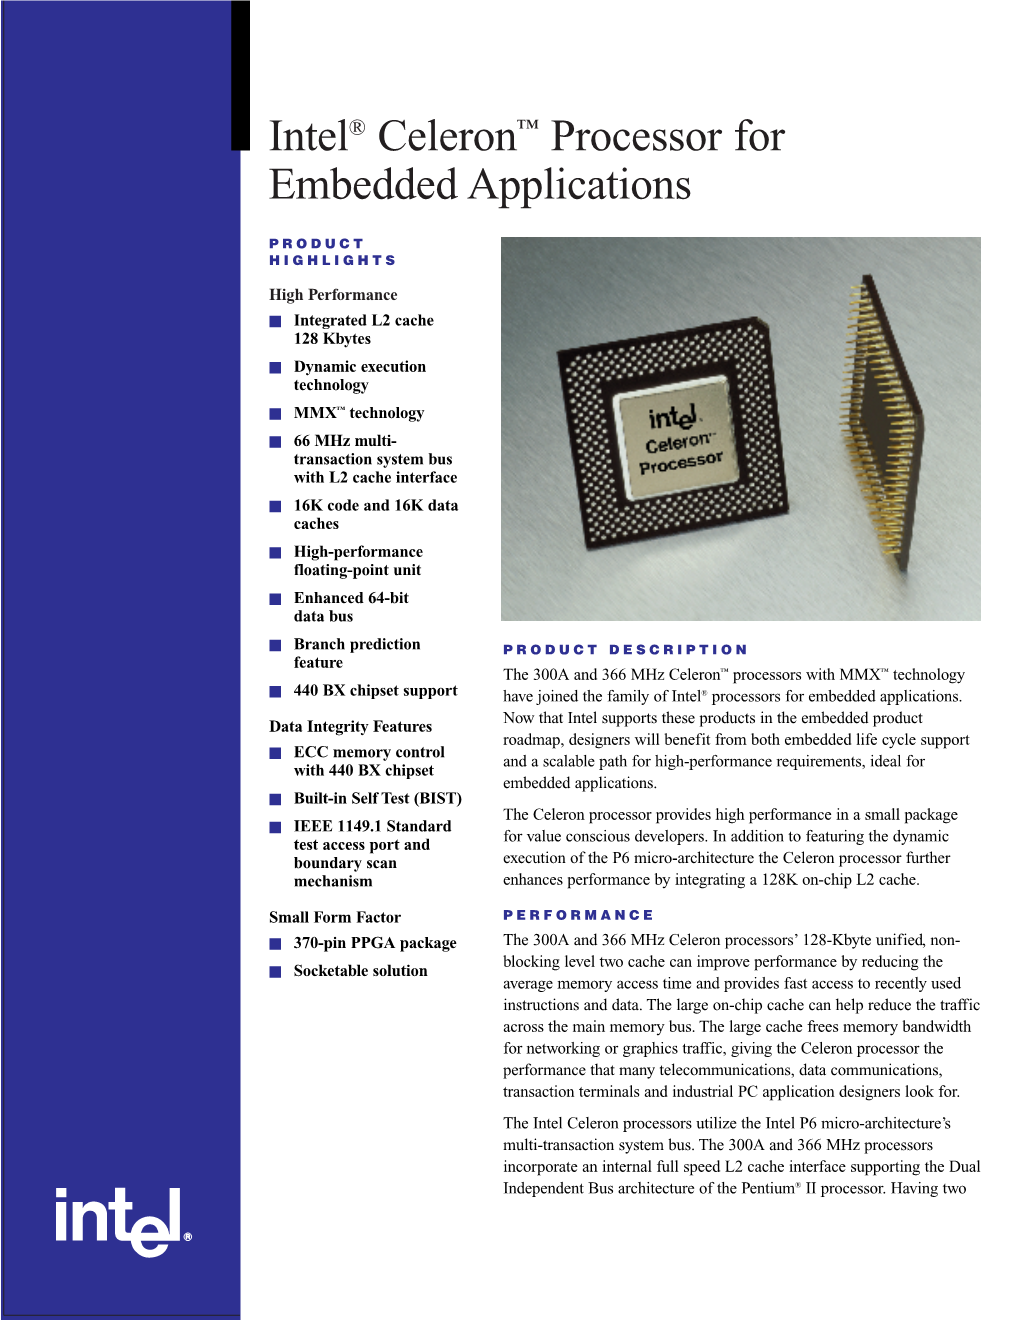 Intel® Celeron™ Processor for Embedded Applications